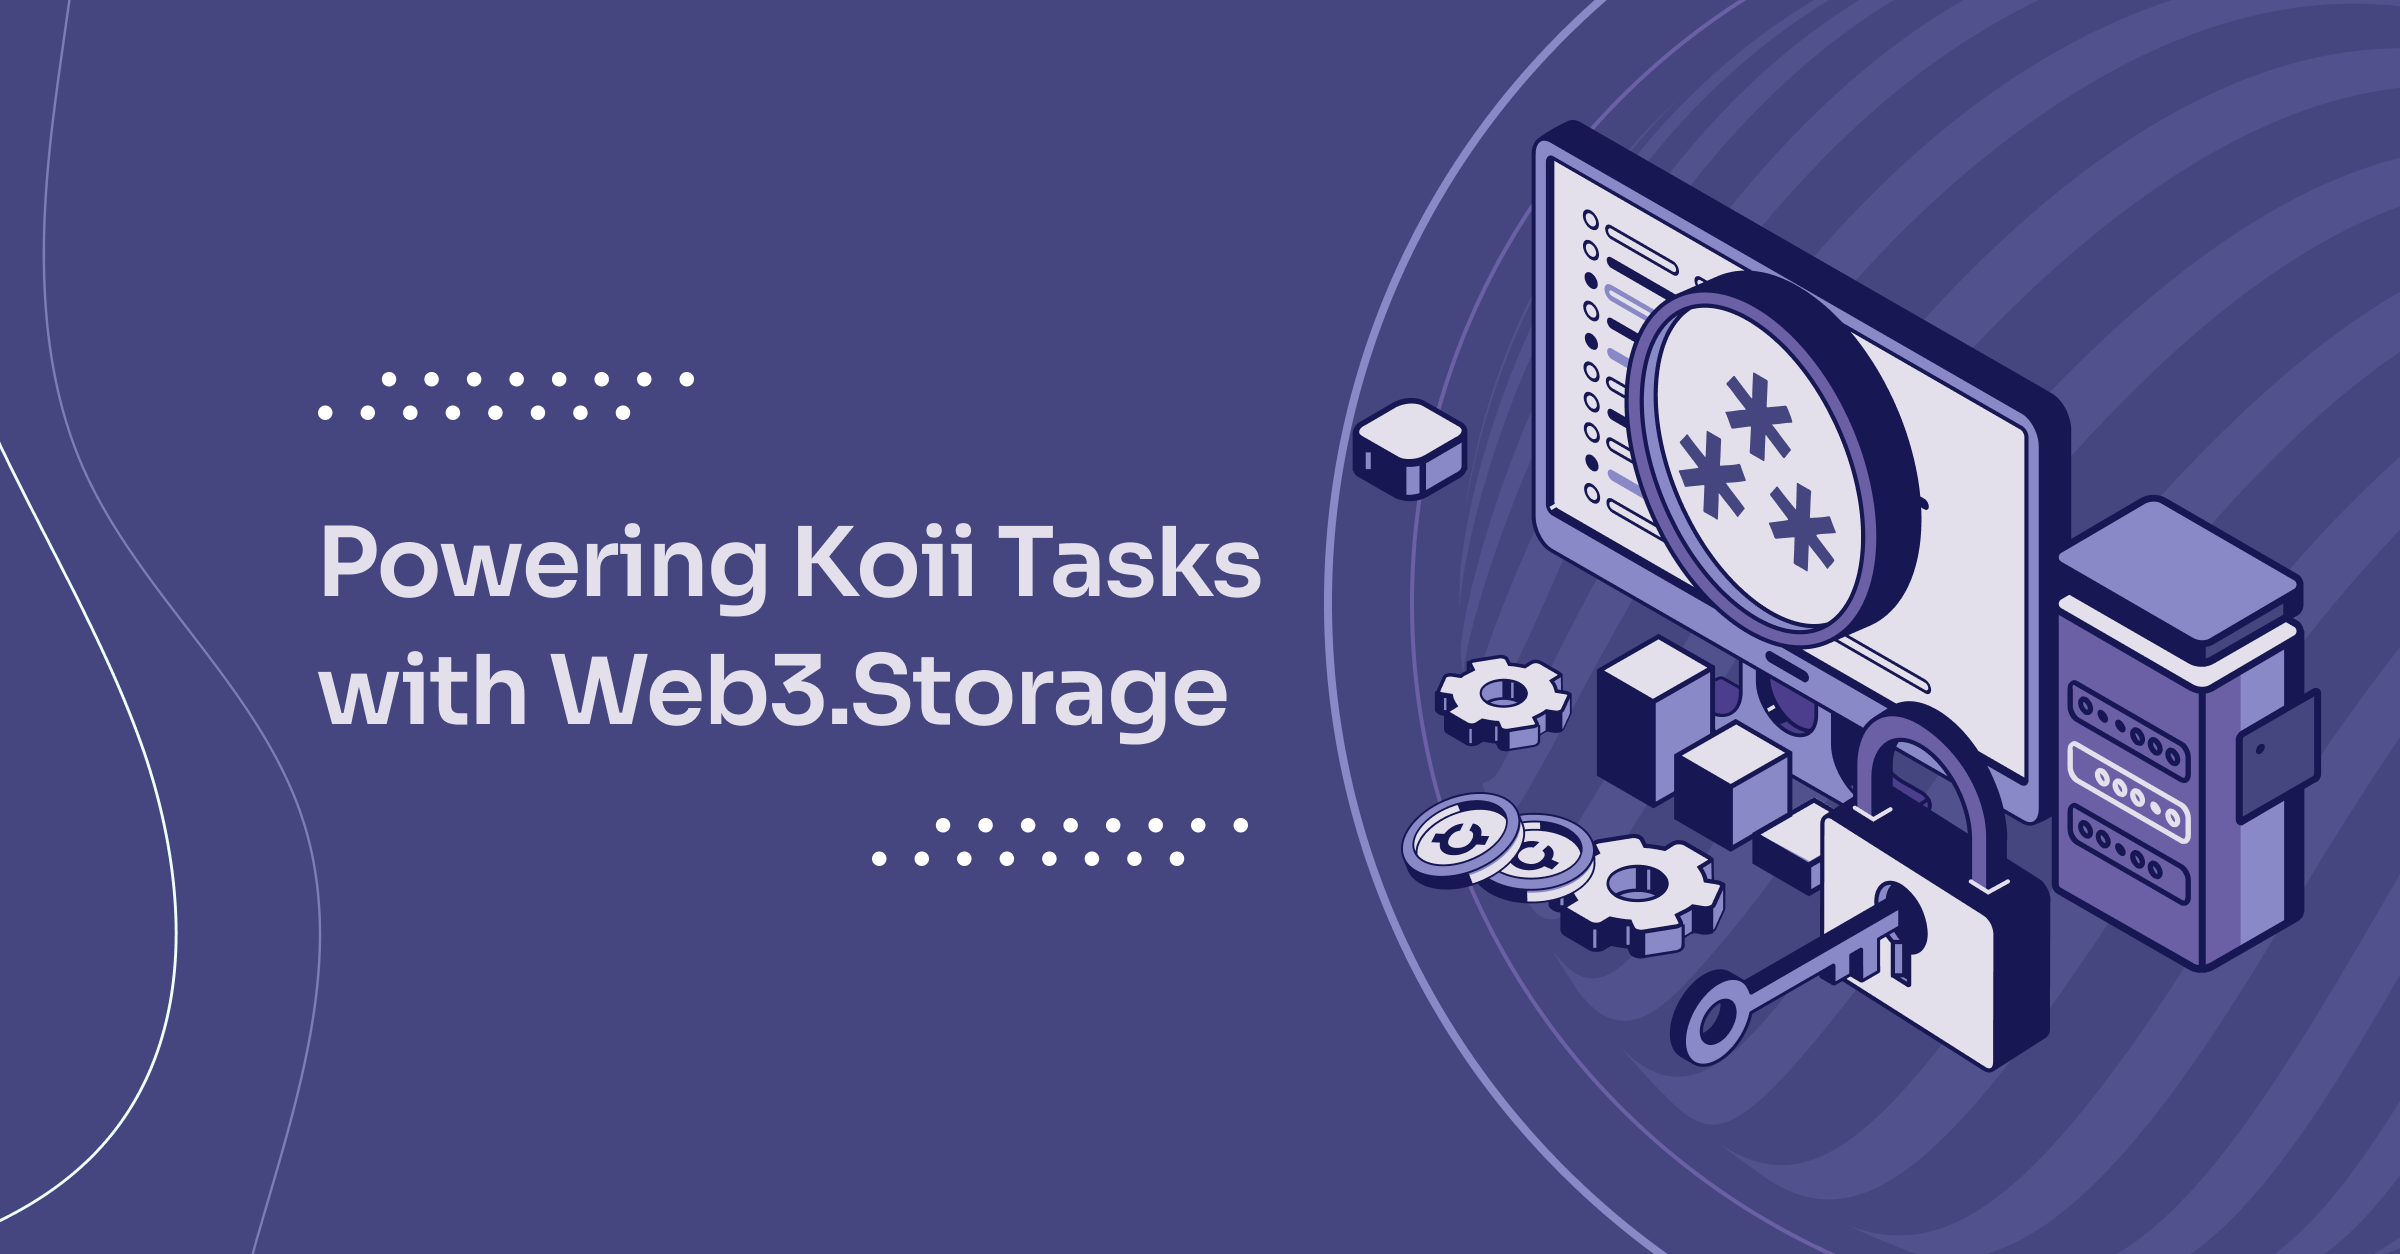 Powering Koii Tasks with Web3.Storage